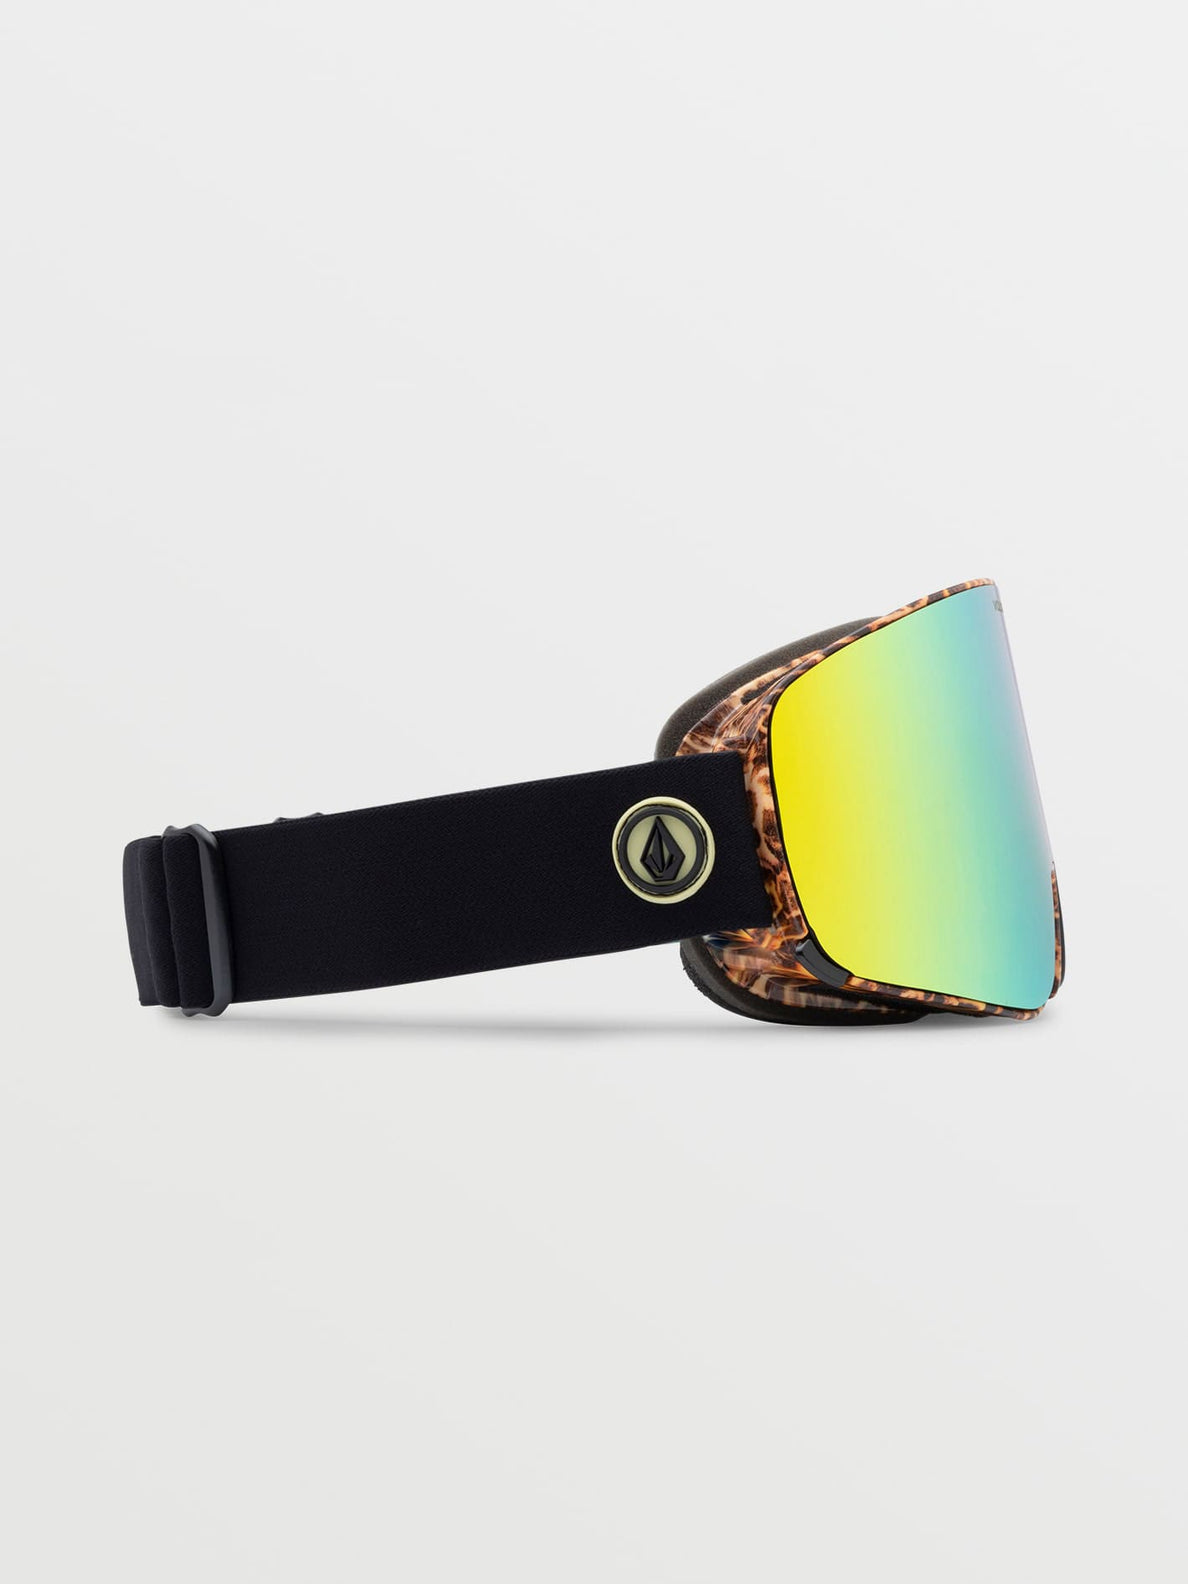 Odyssey Goggle with Bonus Lens - Giraffe / Gold Chrome